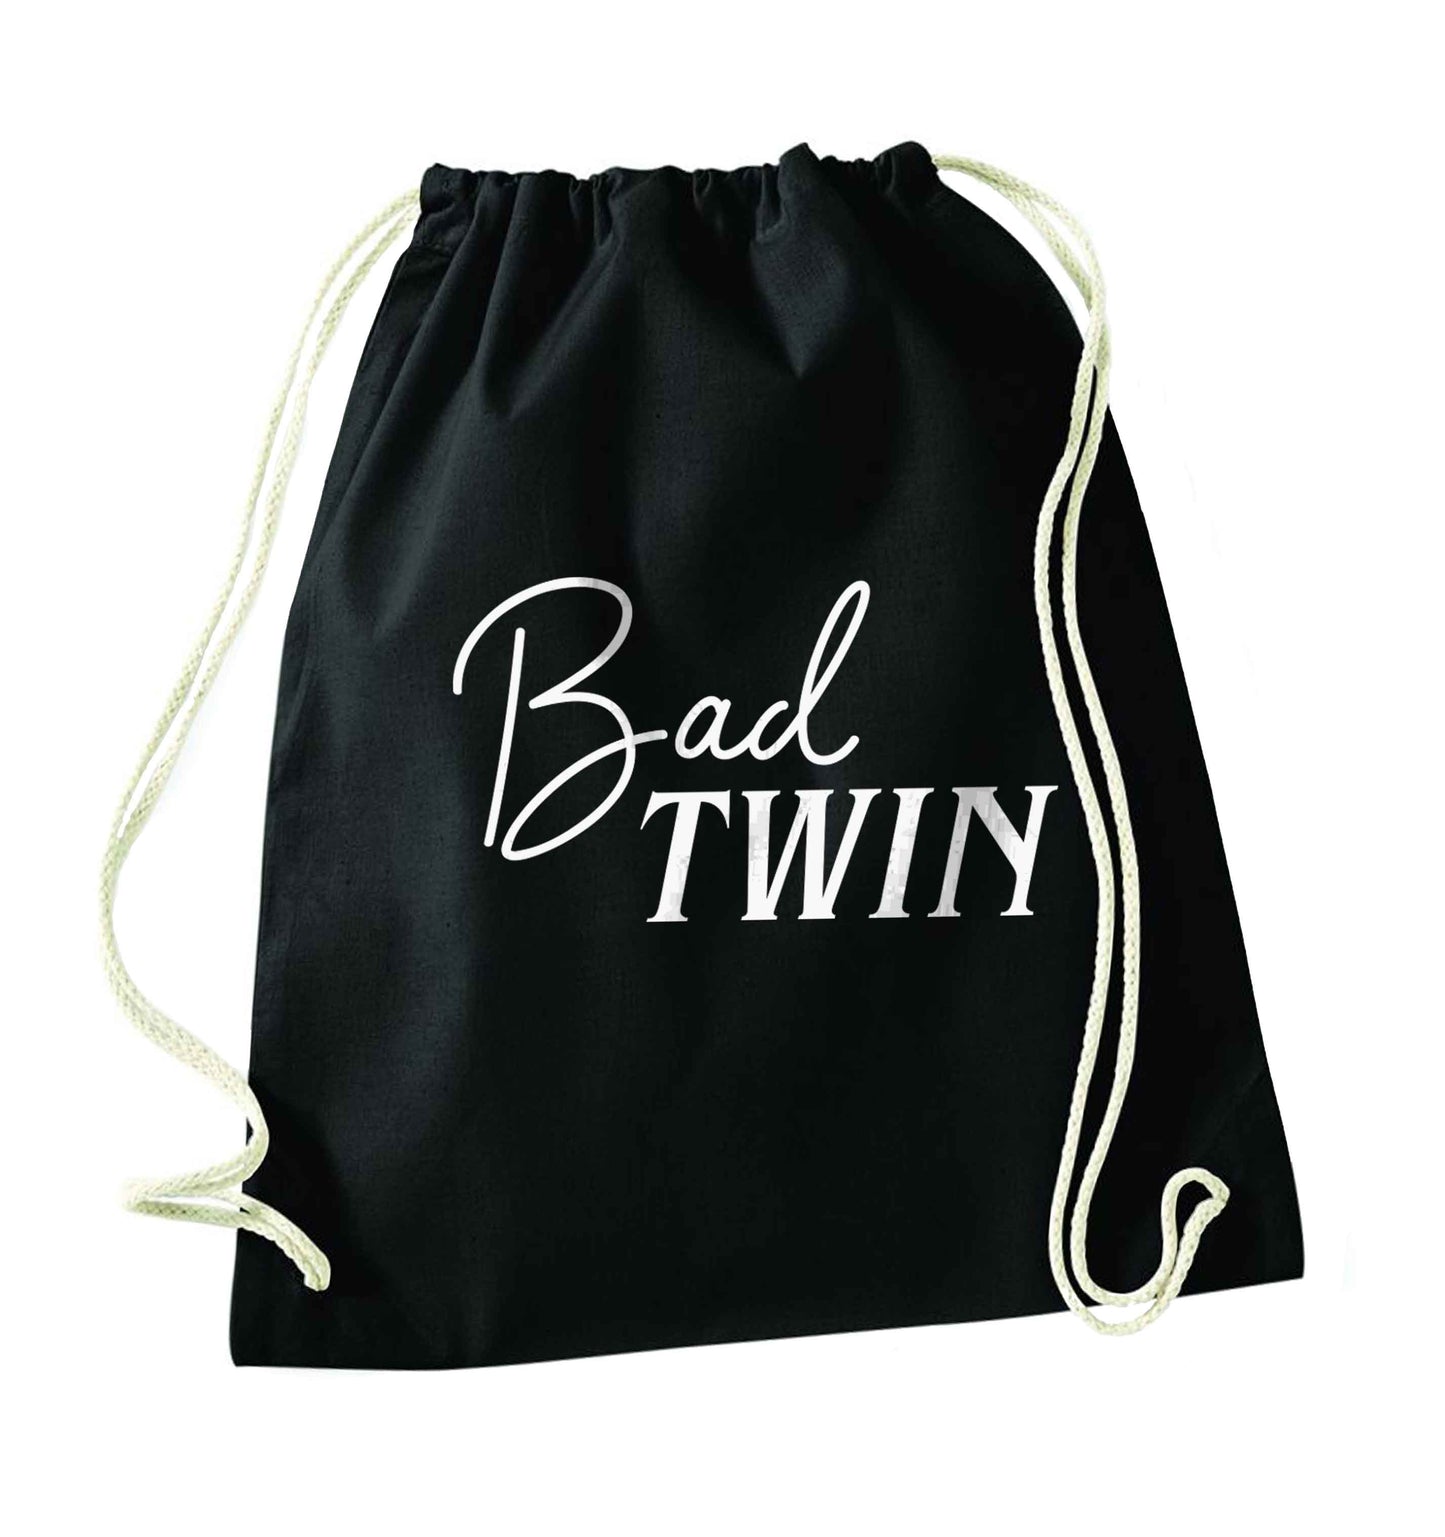 Bad twin black drawstring bag